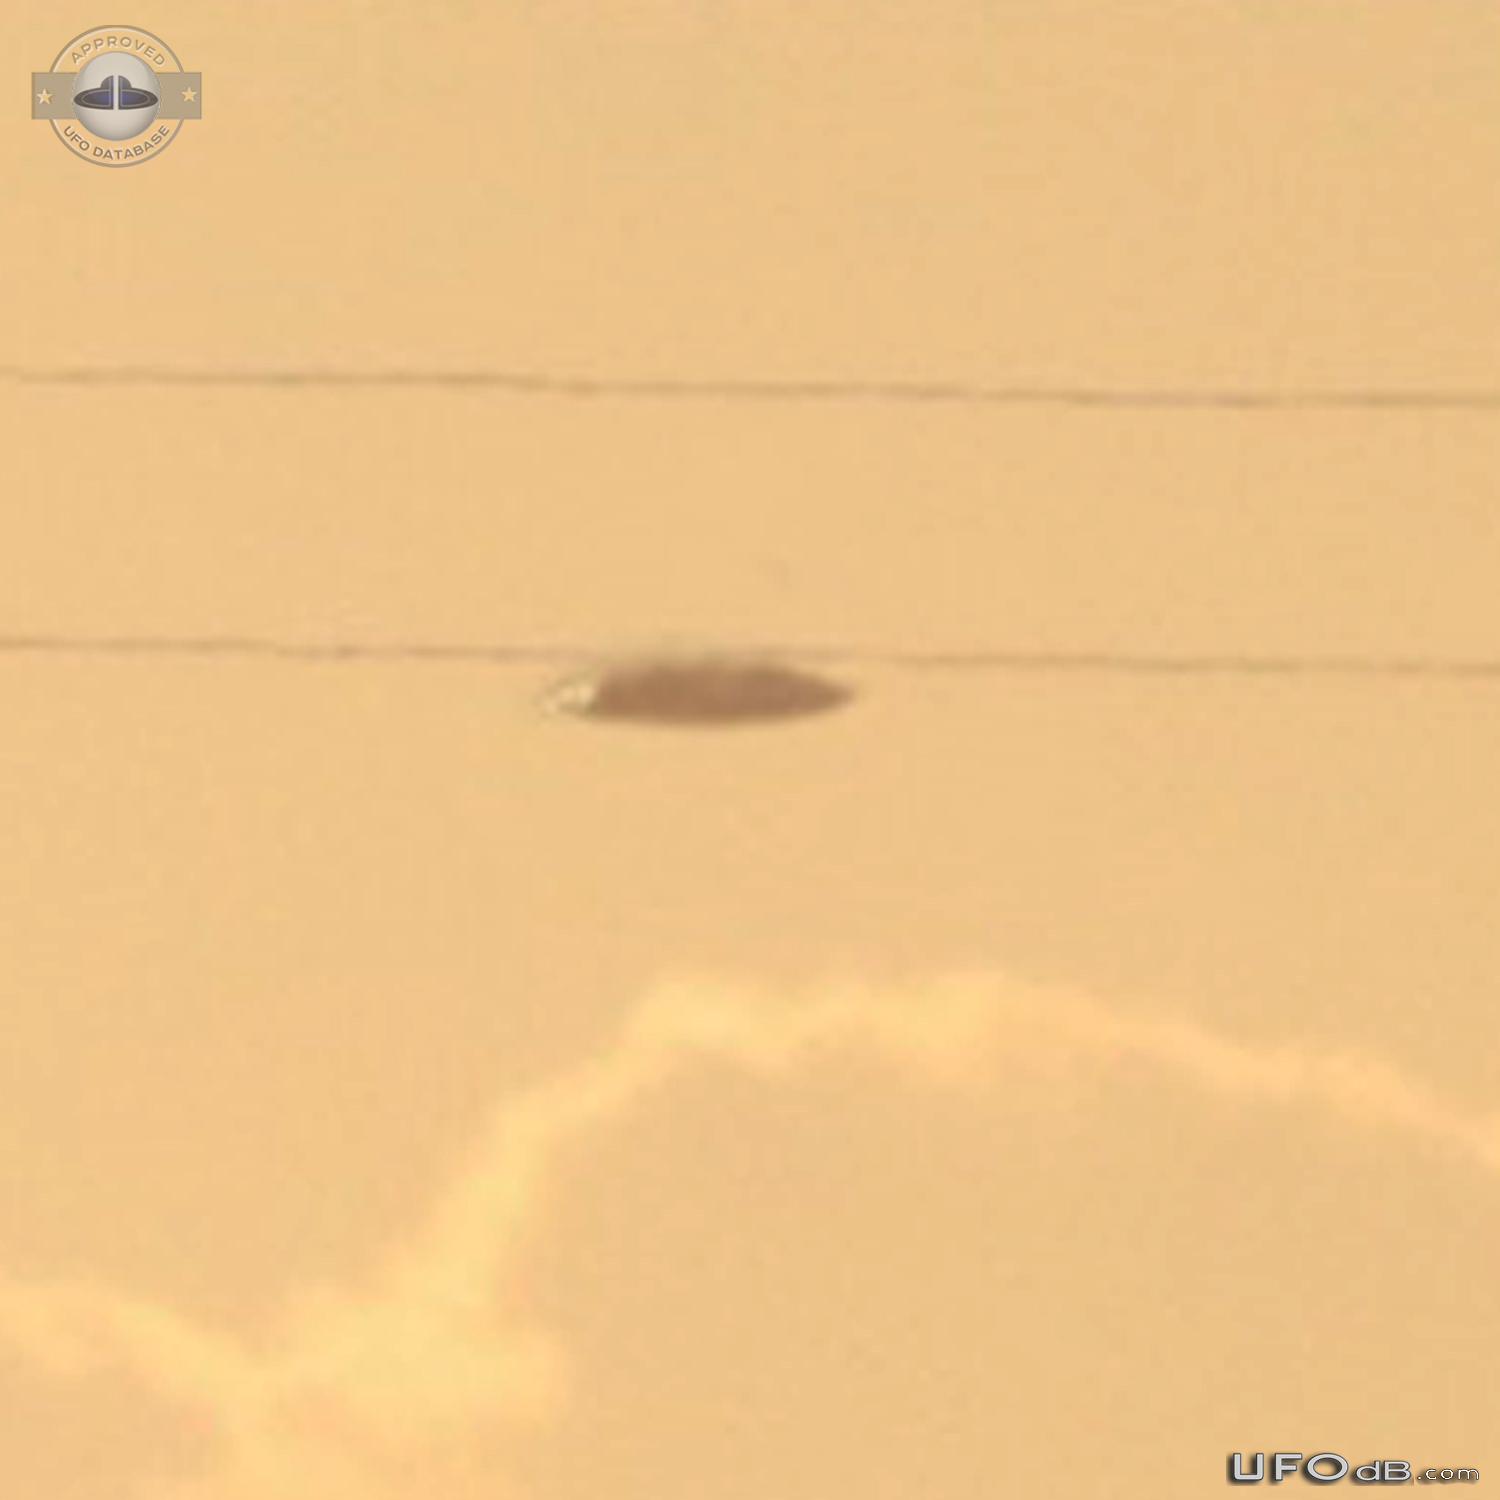 Fighter jets chasing UFOs in Stoil Voyvoda near Nova Zagora Bulgaria 2 UFO Picture #781-9